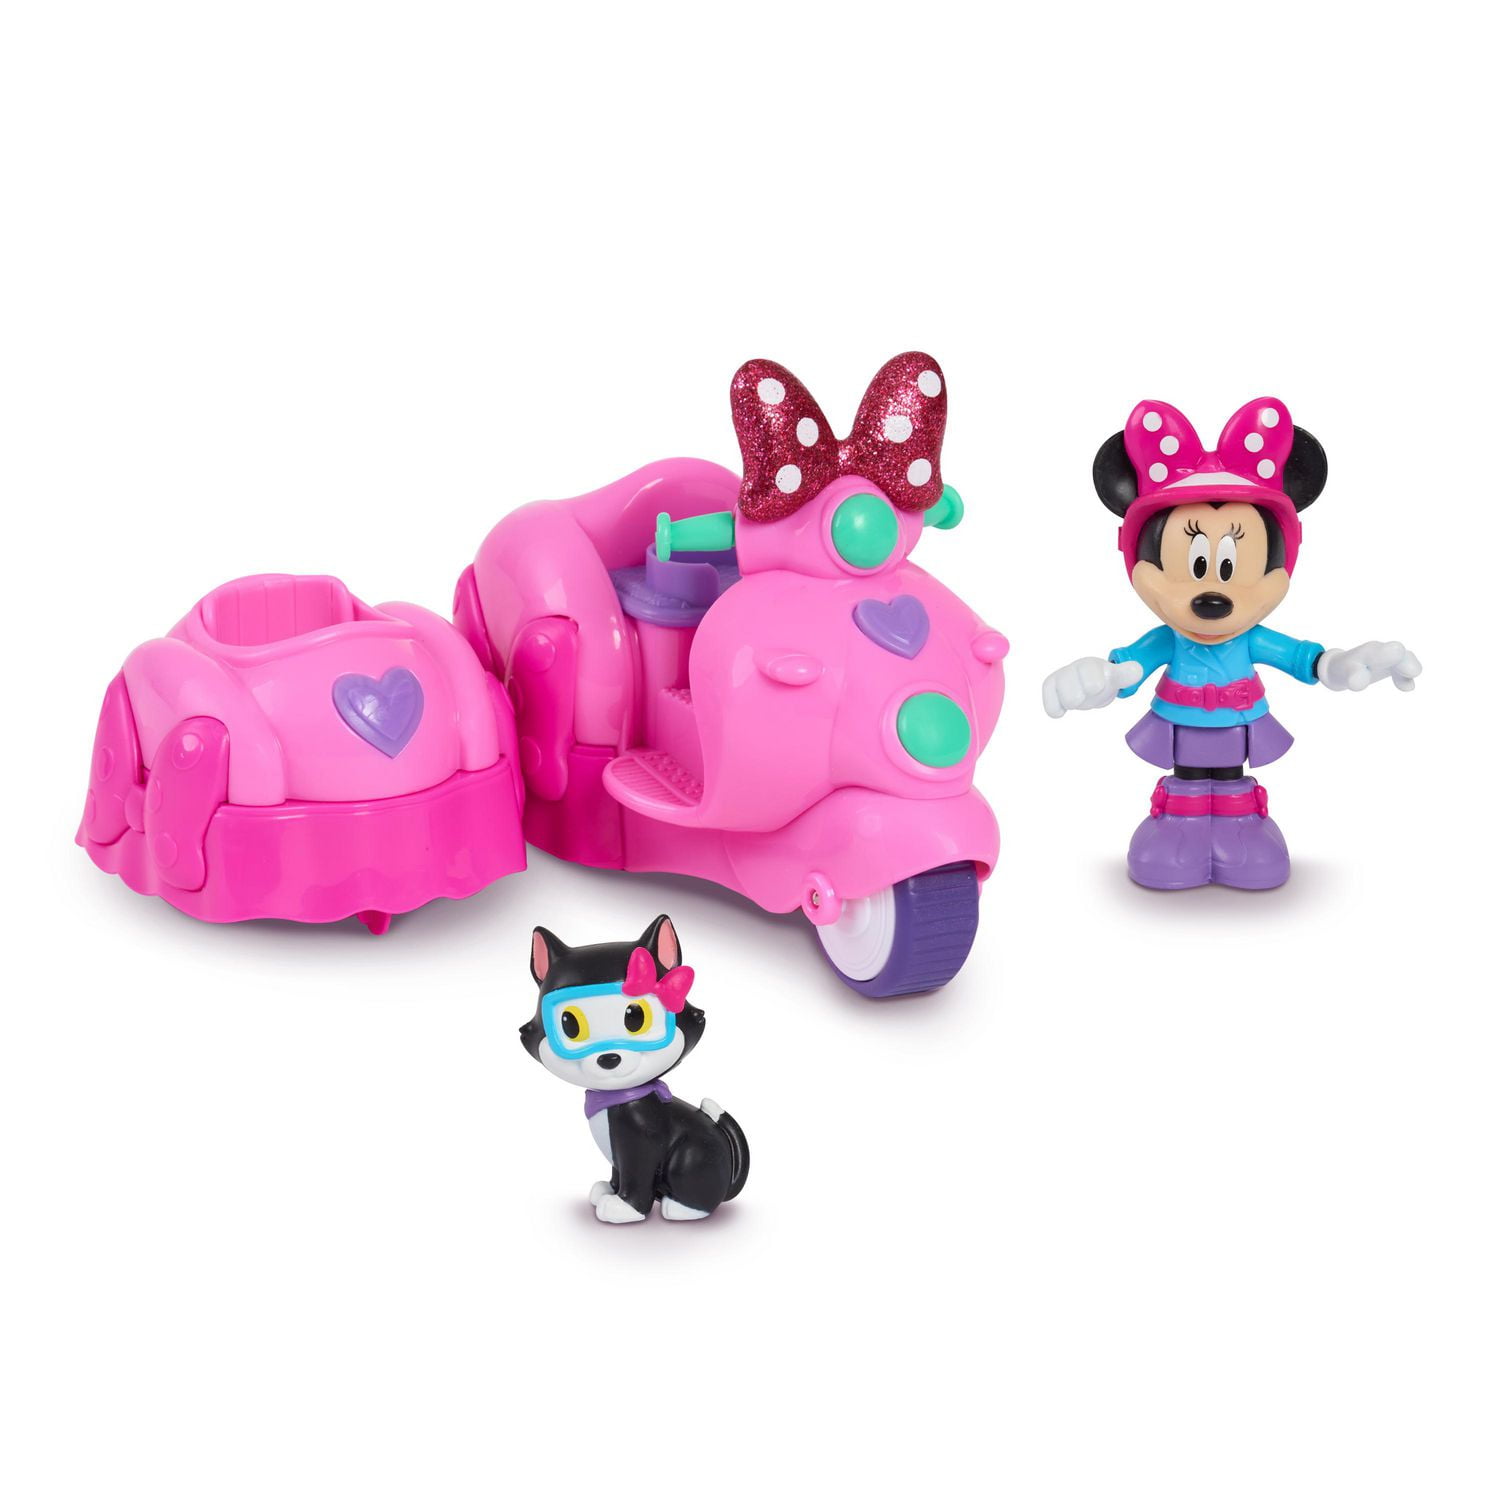 Disney Junior Minnie Mouse Vehicle & Figure Set, Scooter, Includes